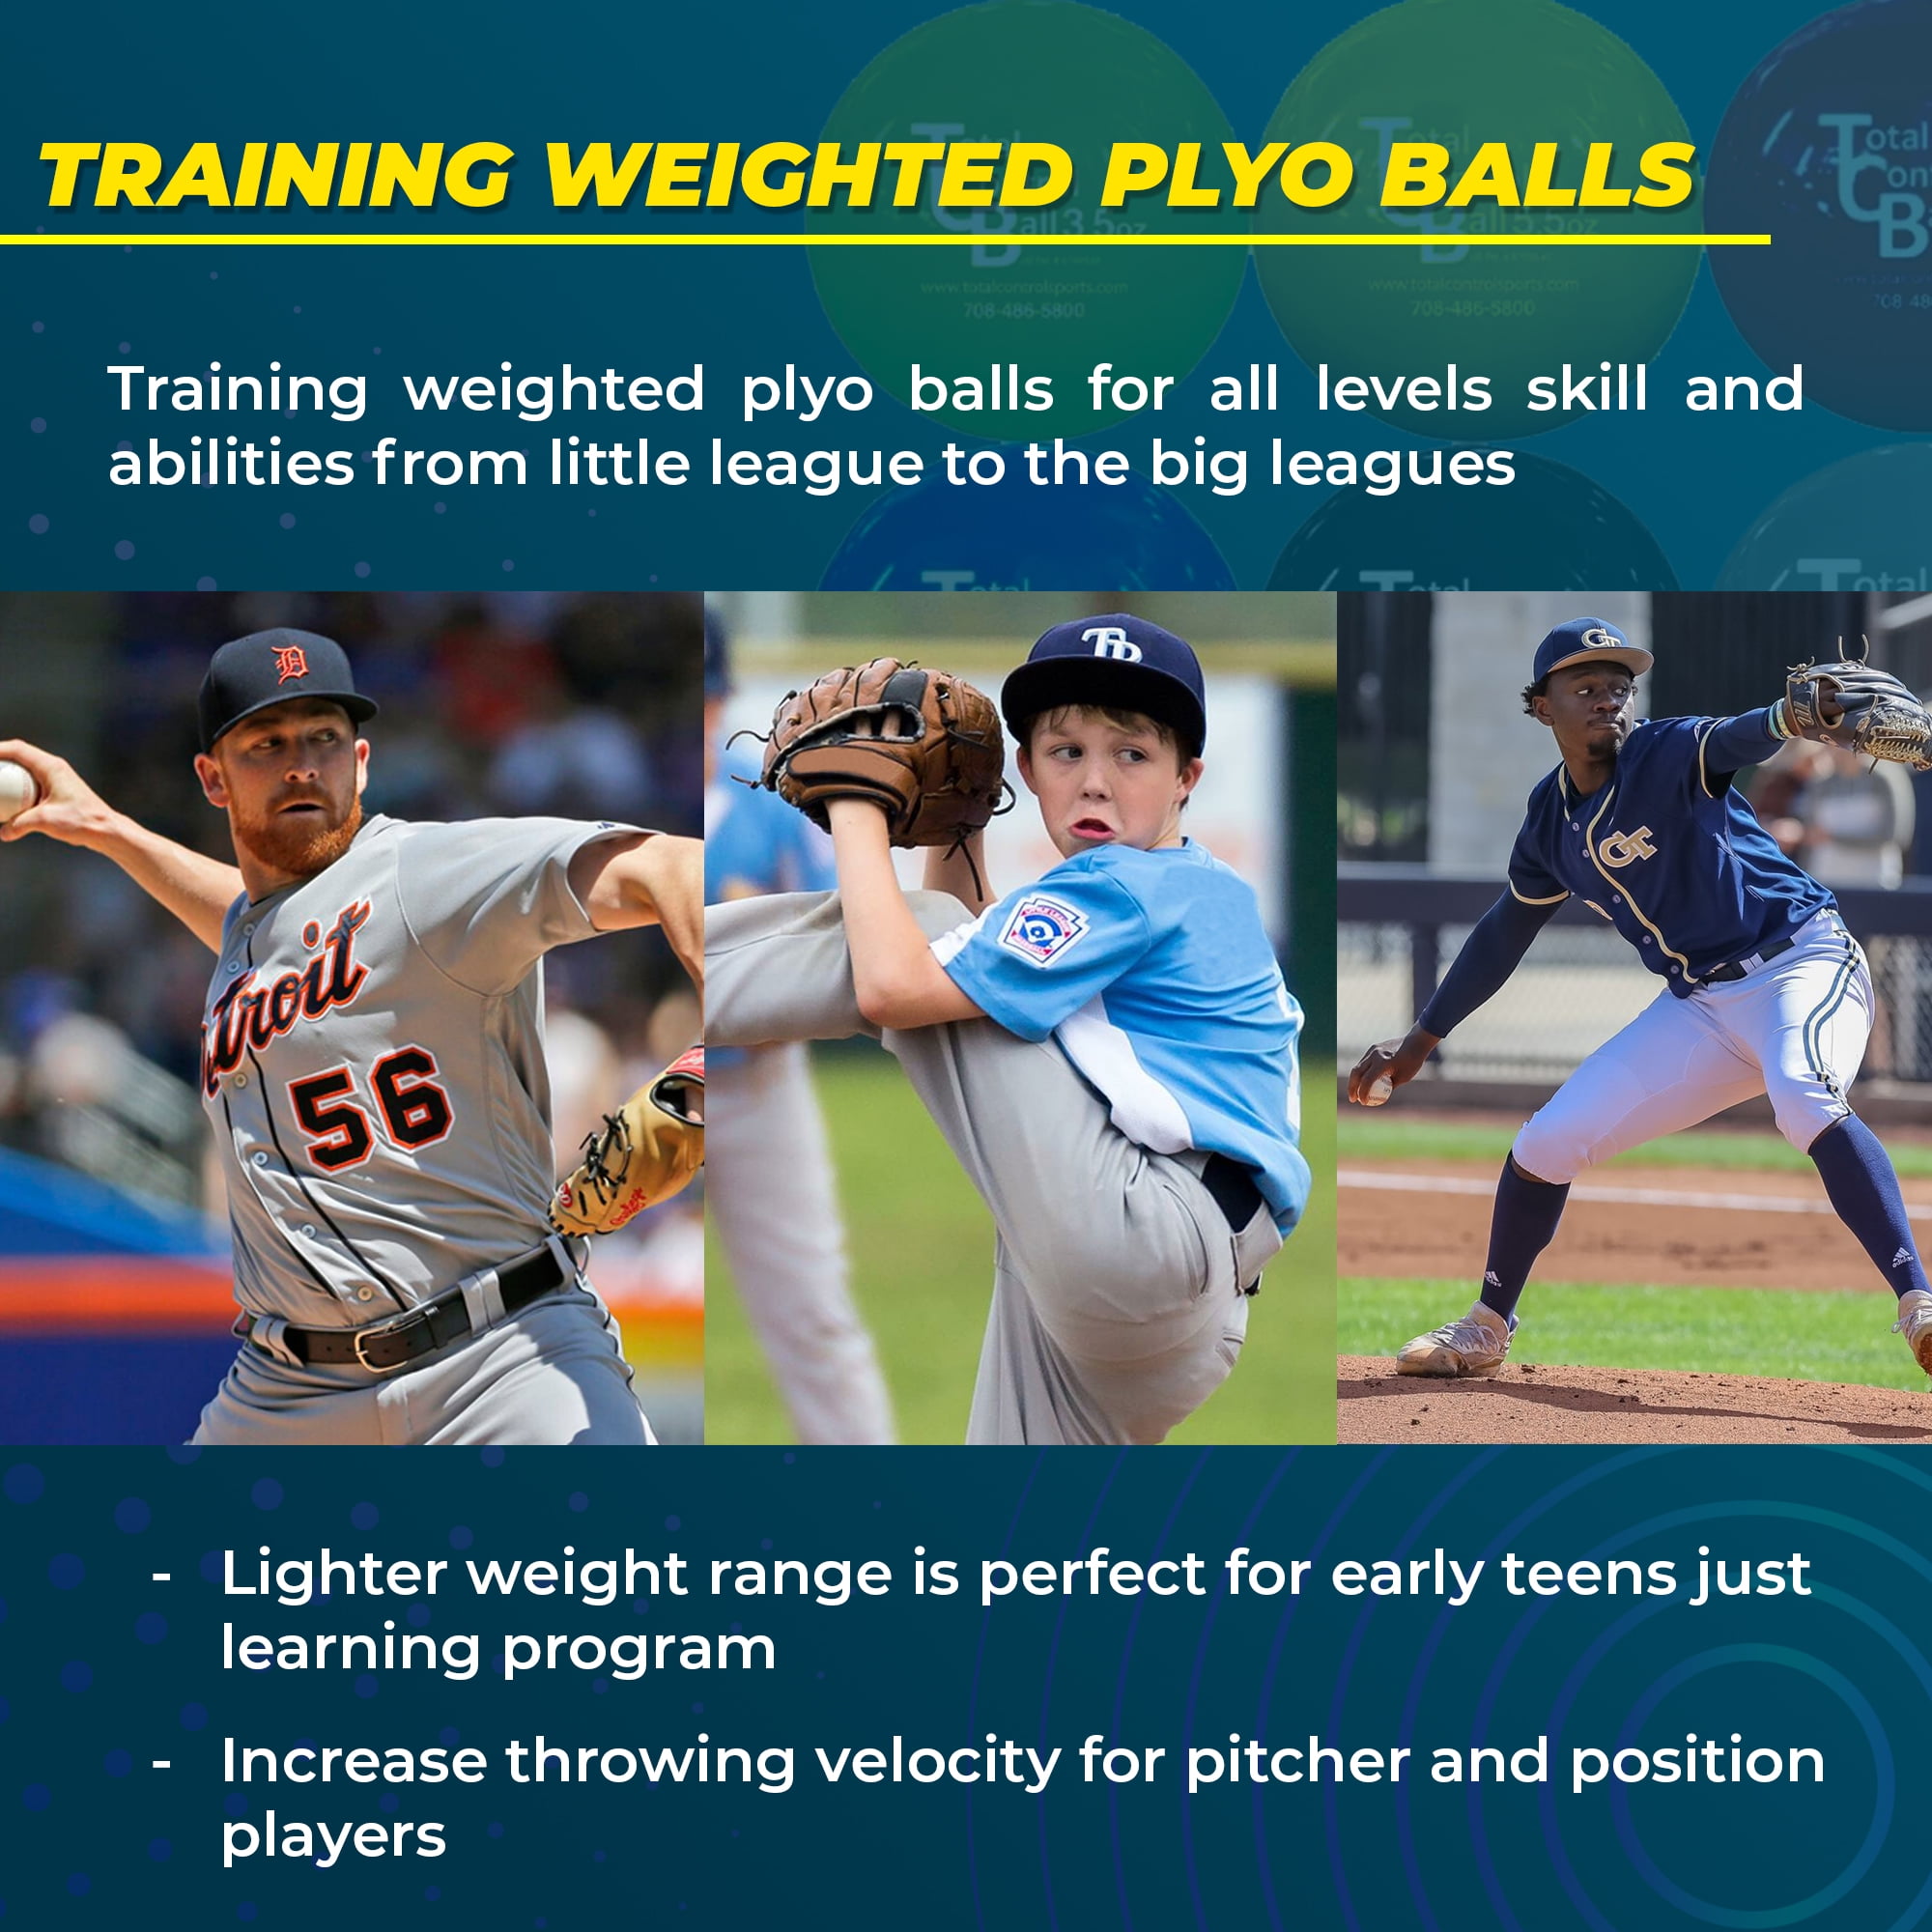 TCB™ Weighted Training Baseballs. Sports Facilities Group Inc.